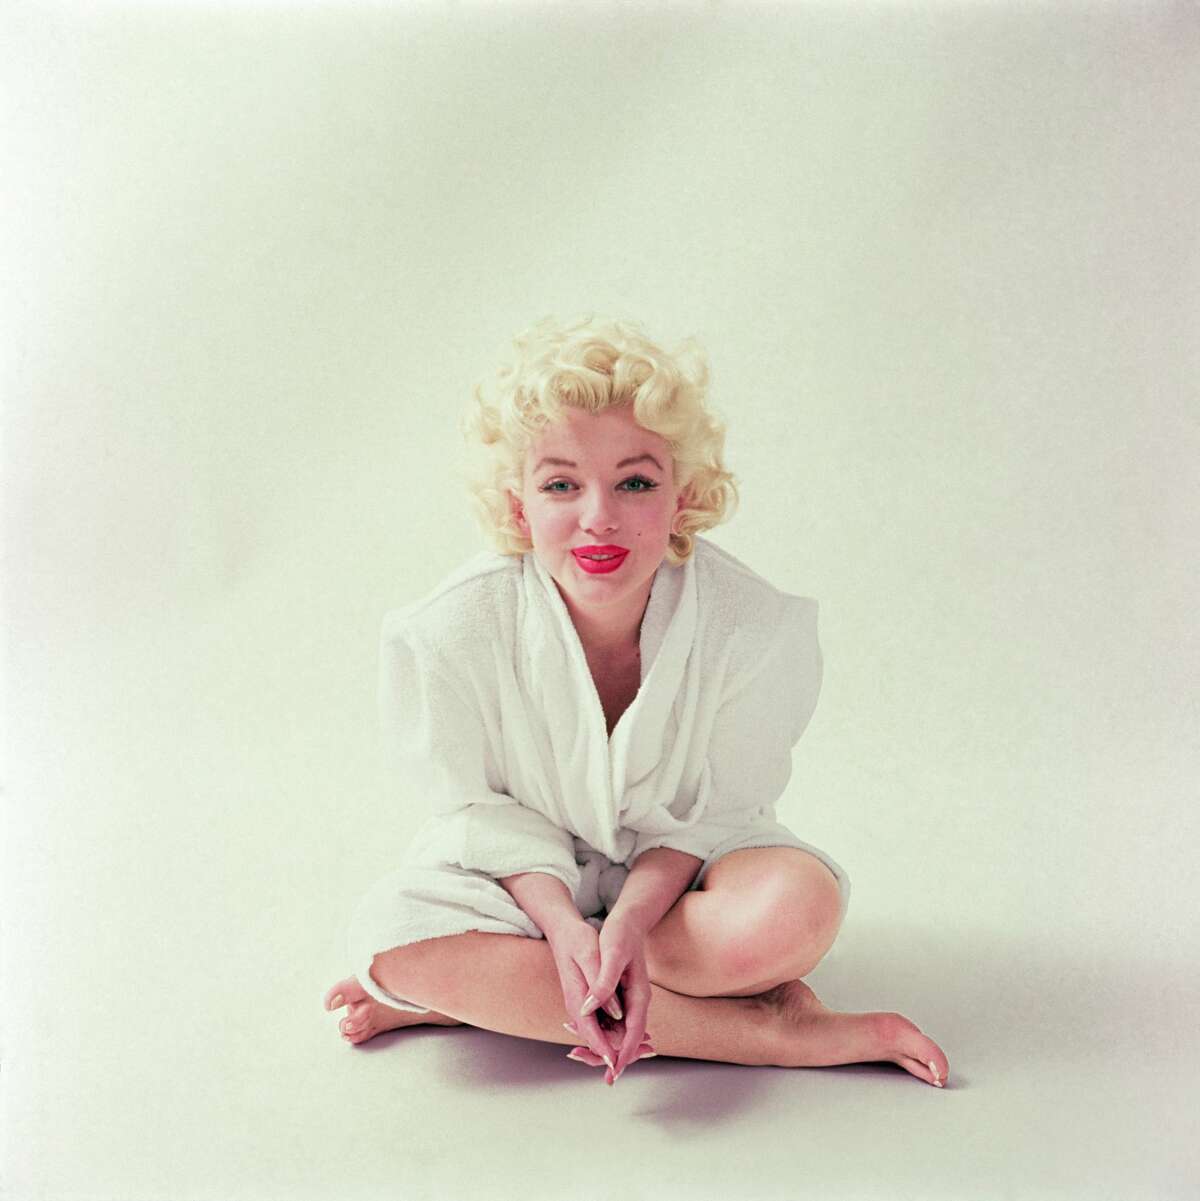 Rare Photos Of Marilyn Monroe Showcase Her Spirit Beauty